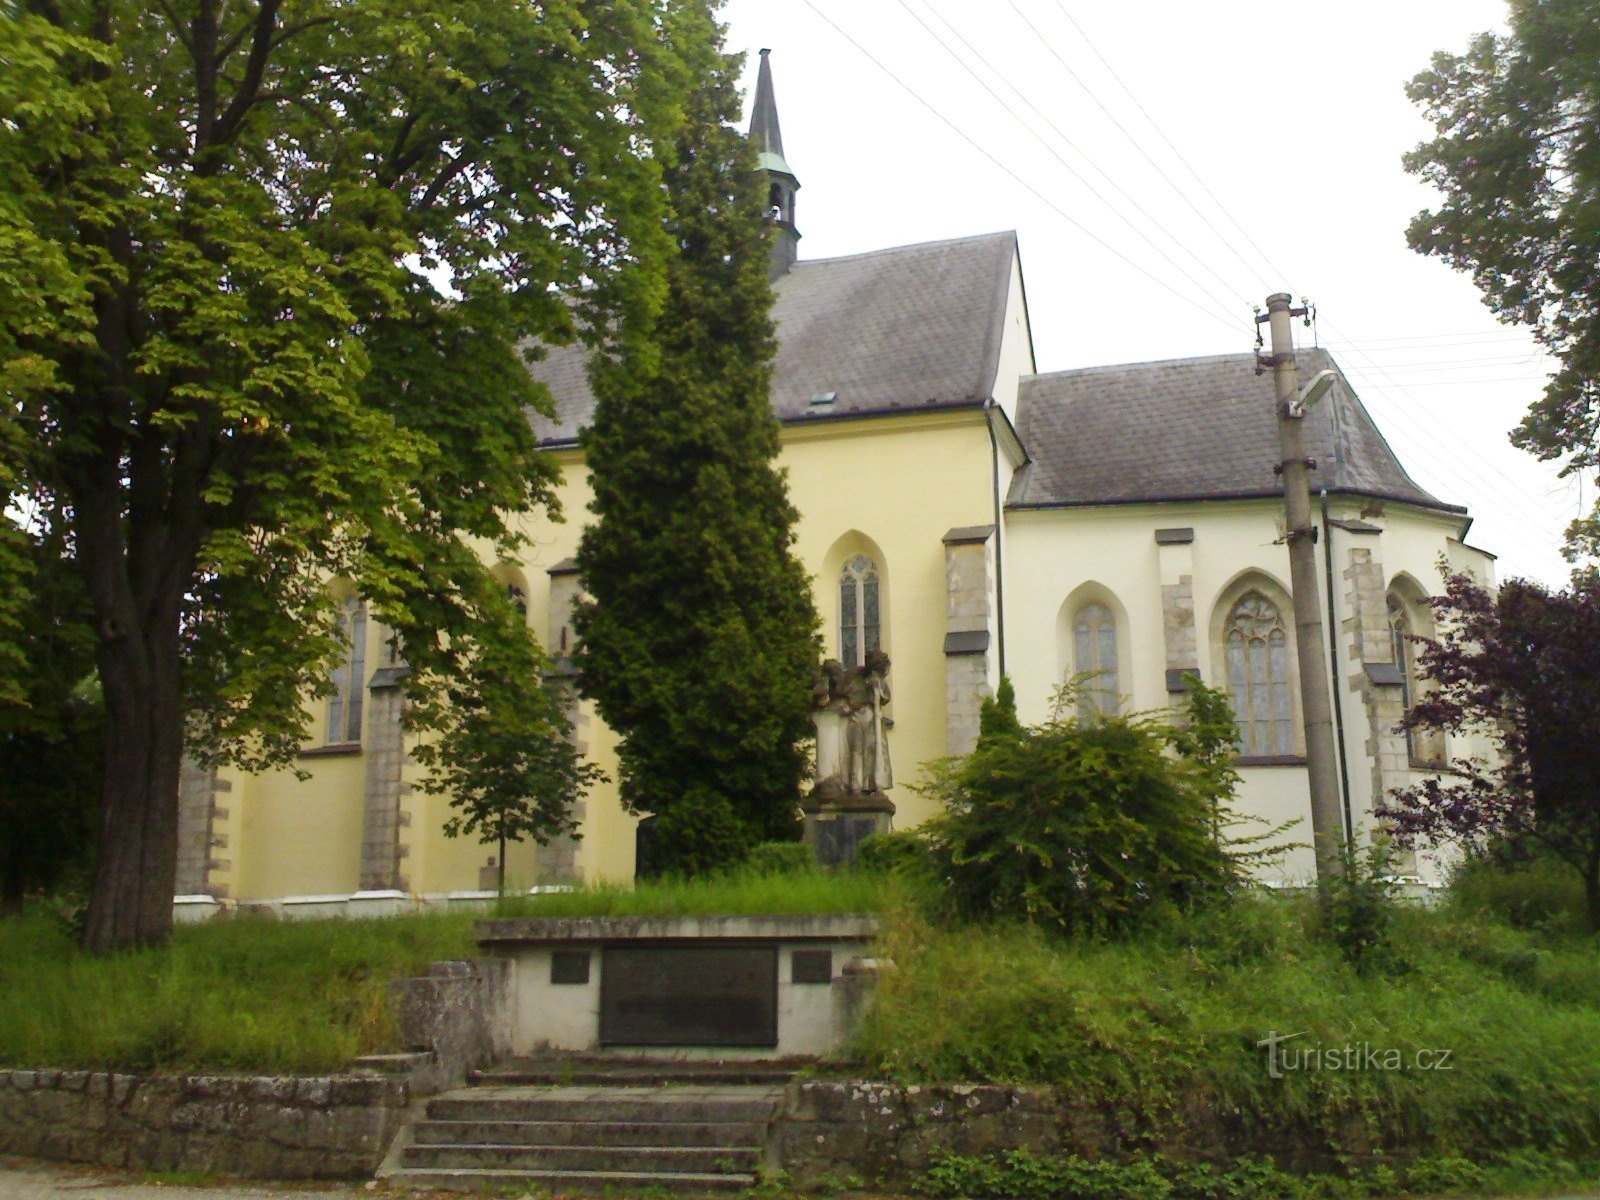 Rovensko pod Troskami - Kirche St. Wenzel